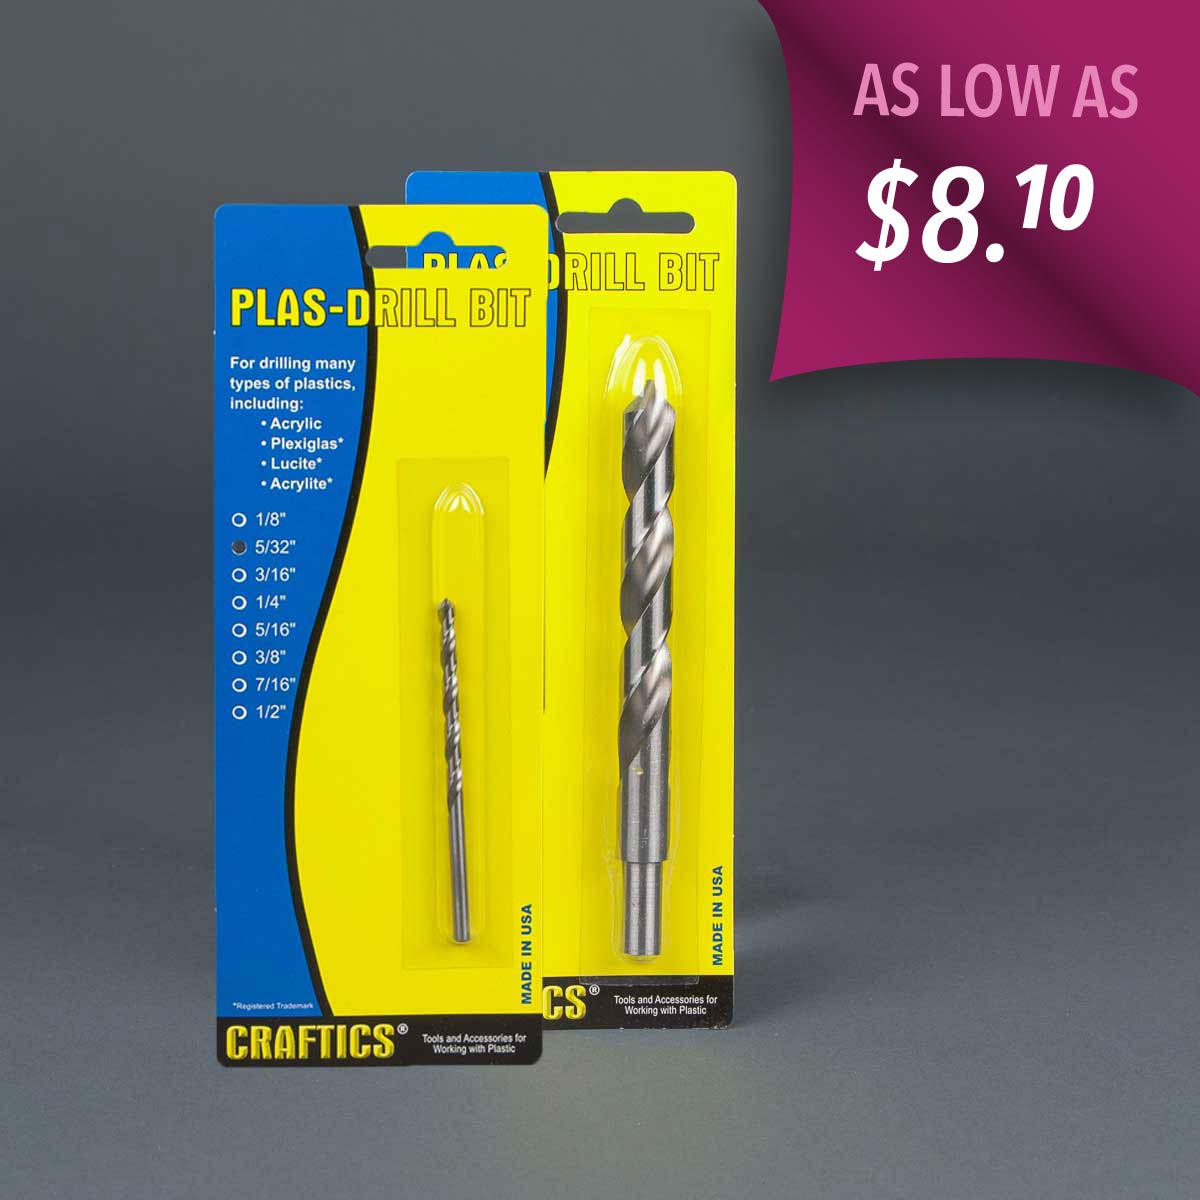 Craftics Plas-drill bits for acrylic and other plastics.